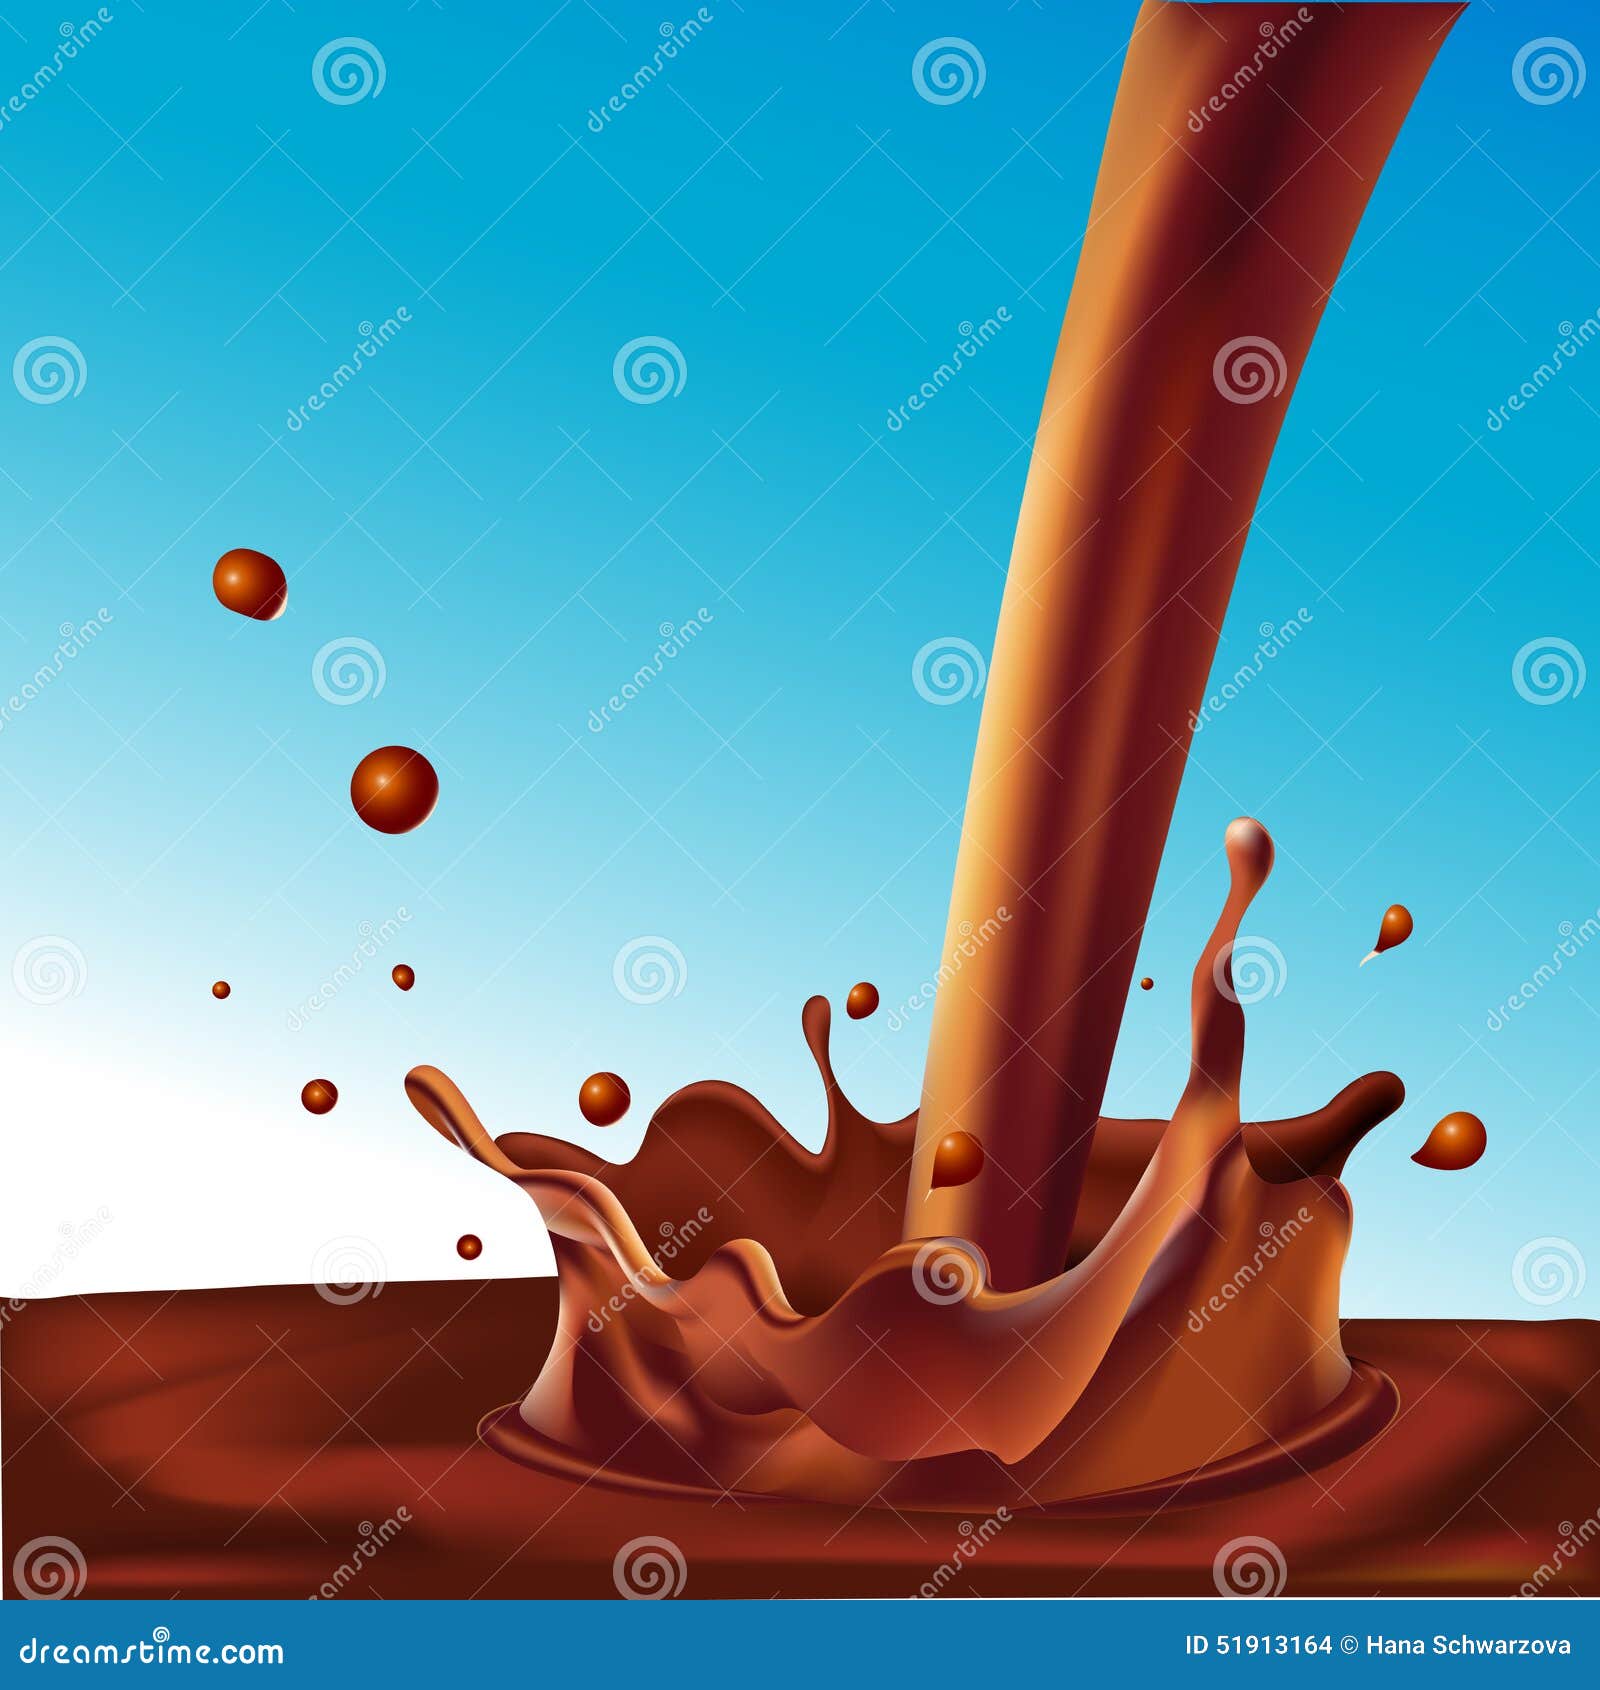 Cup with milk chocolate splash, illustration - Stock Image - F024